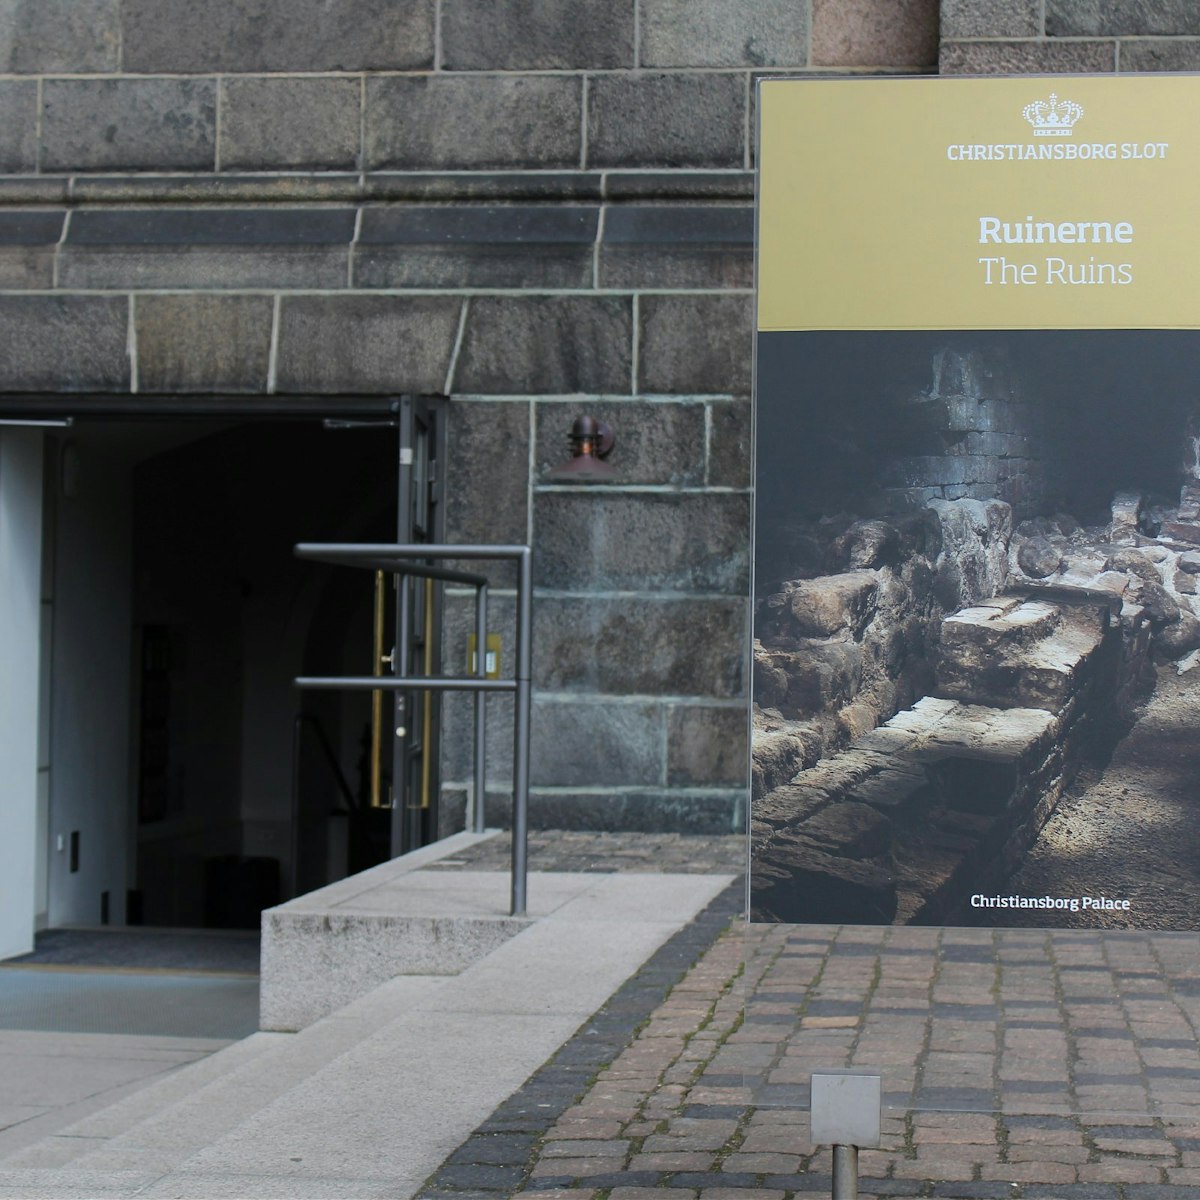 Ruinerne under Christiansborg signage and entrance tight shot